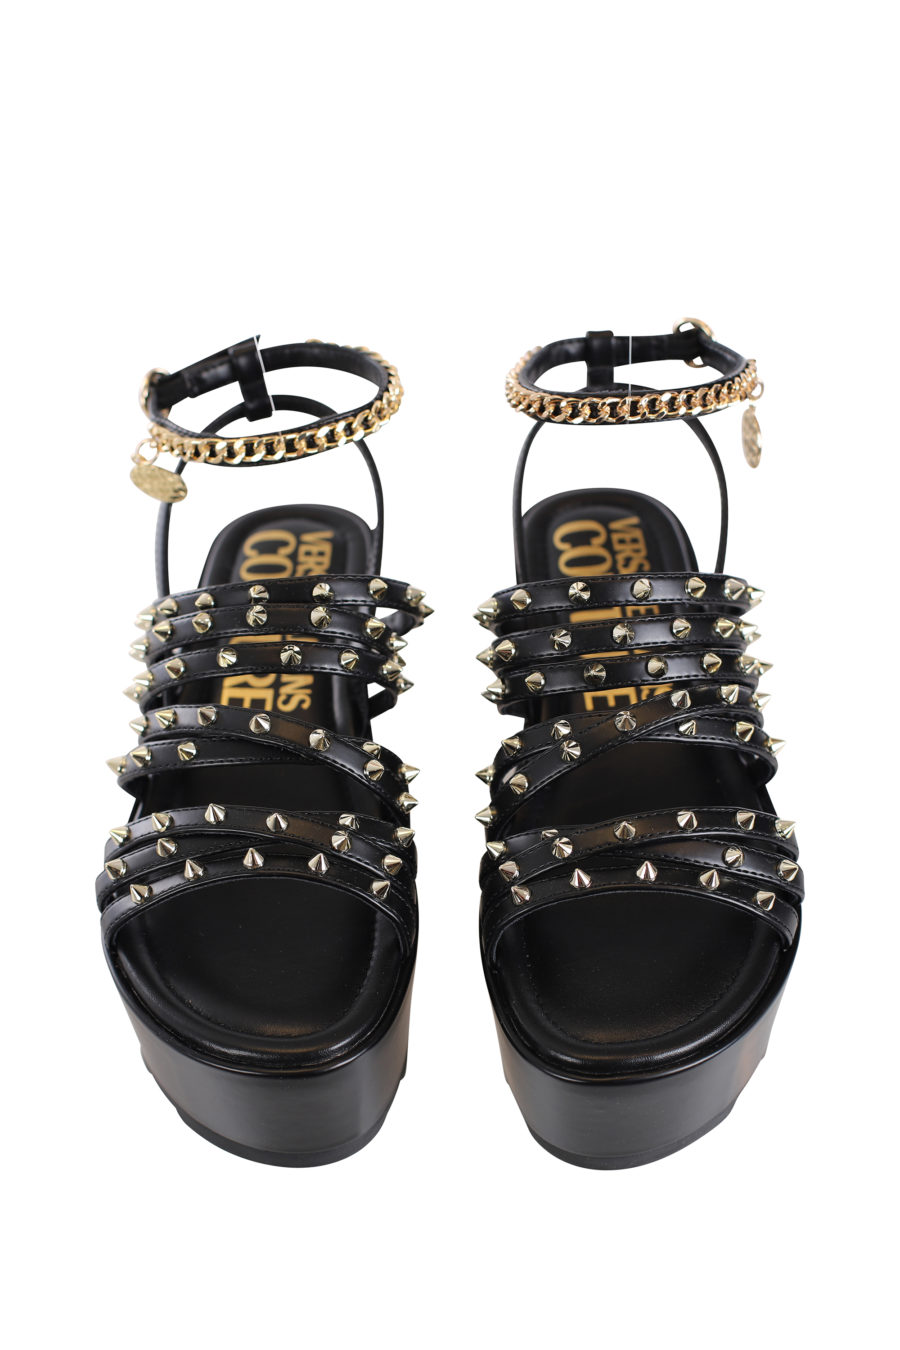 Sandalias negras con plataforma y detalles dorados - IMG 0244